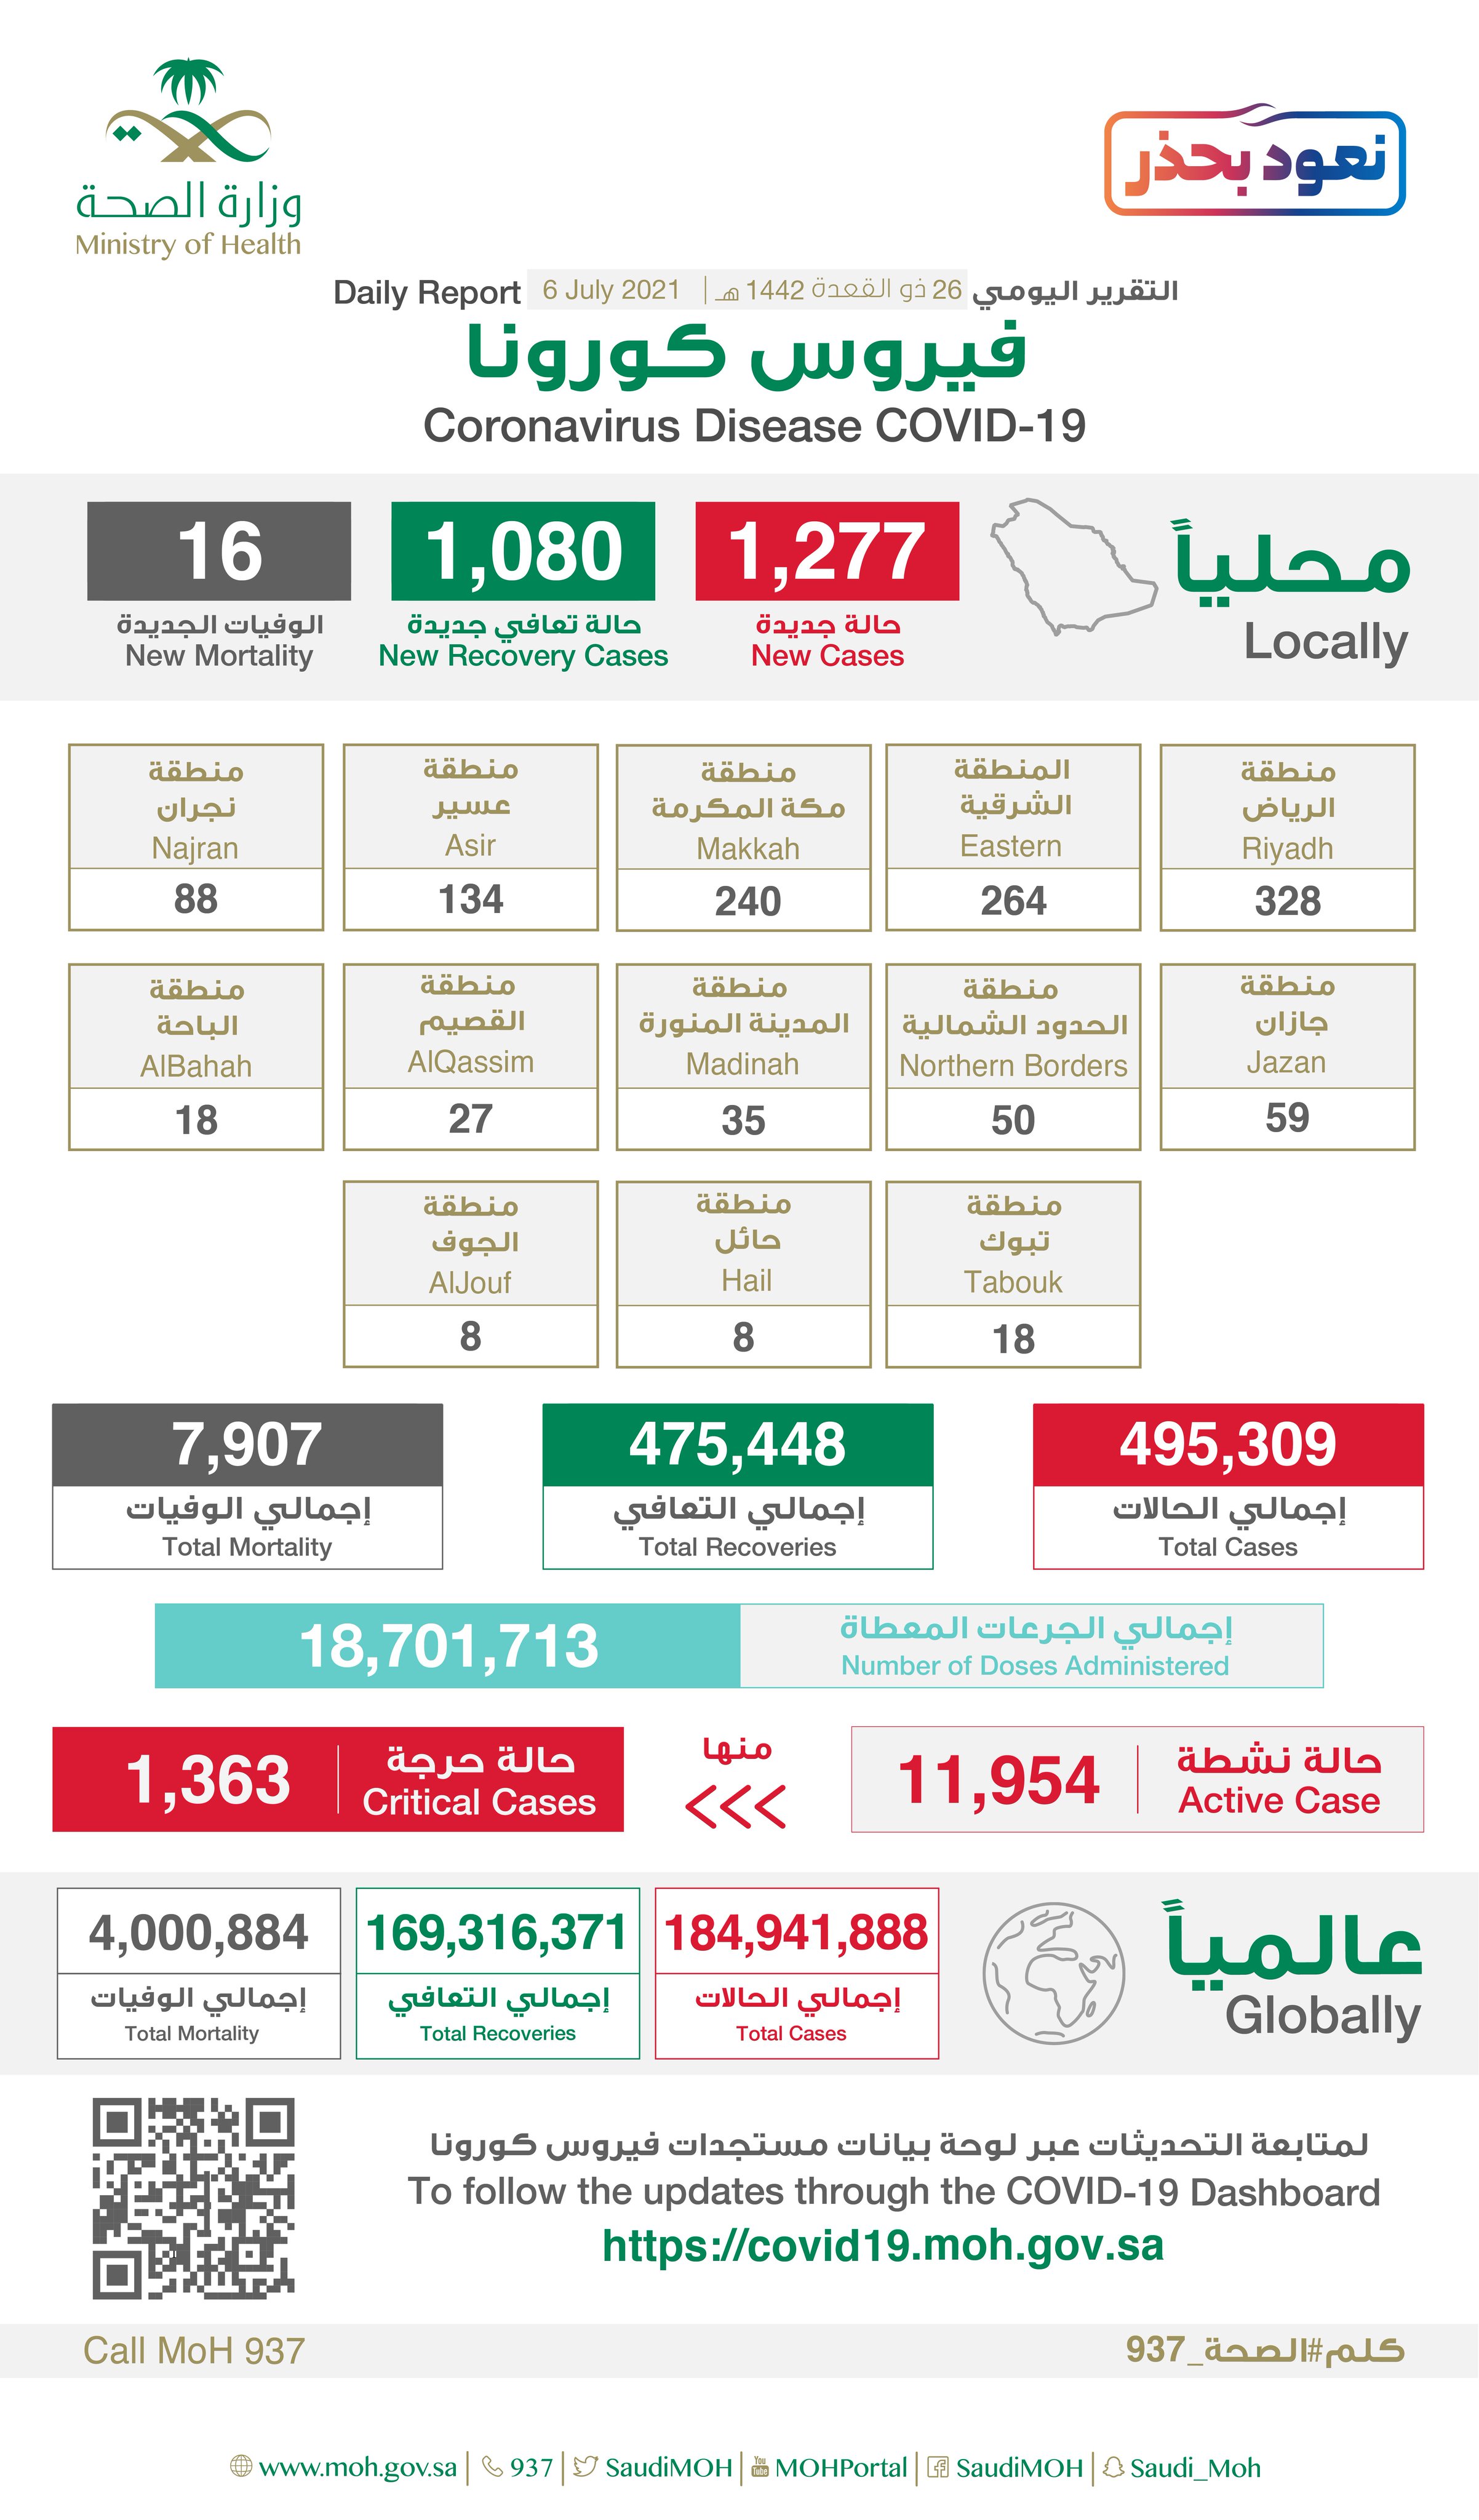 Saudi Arabia Coronavirus : Total Cases :495,309 , New Cases :1,277, Cured : 475,448 , Deaths: 7,907, Active Cases : 11,954